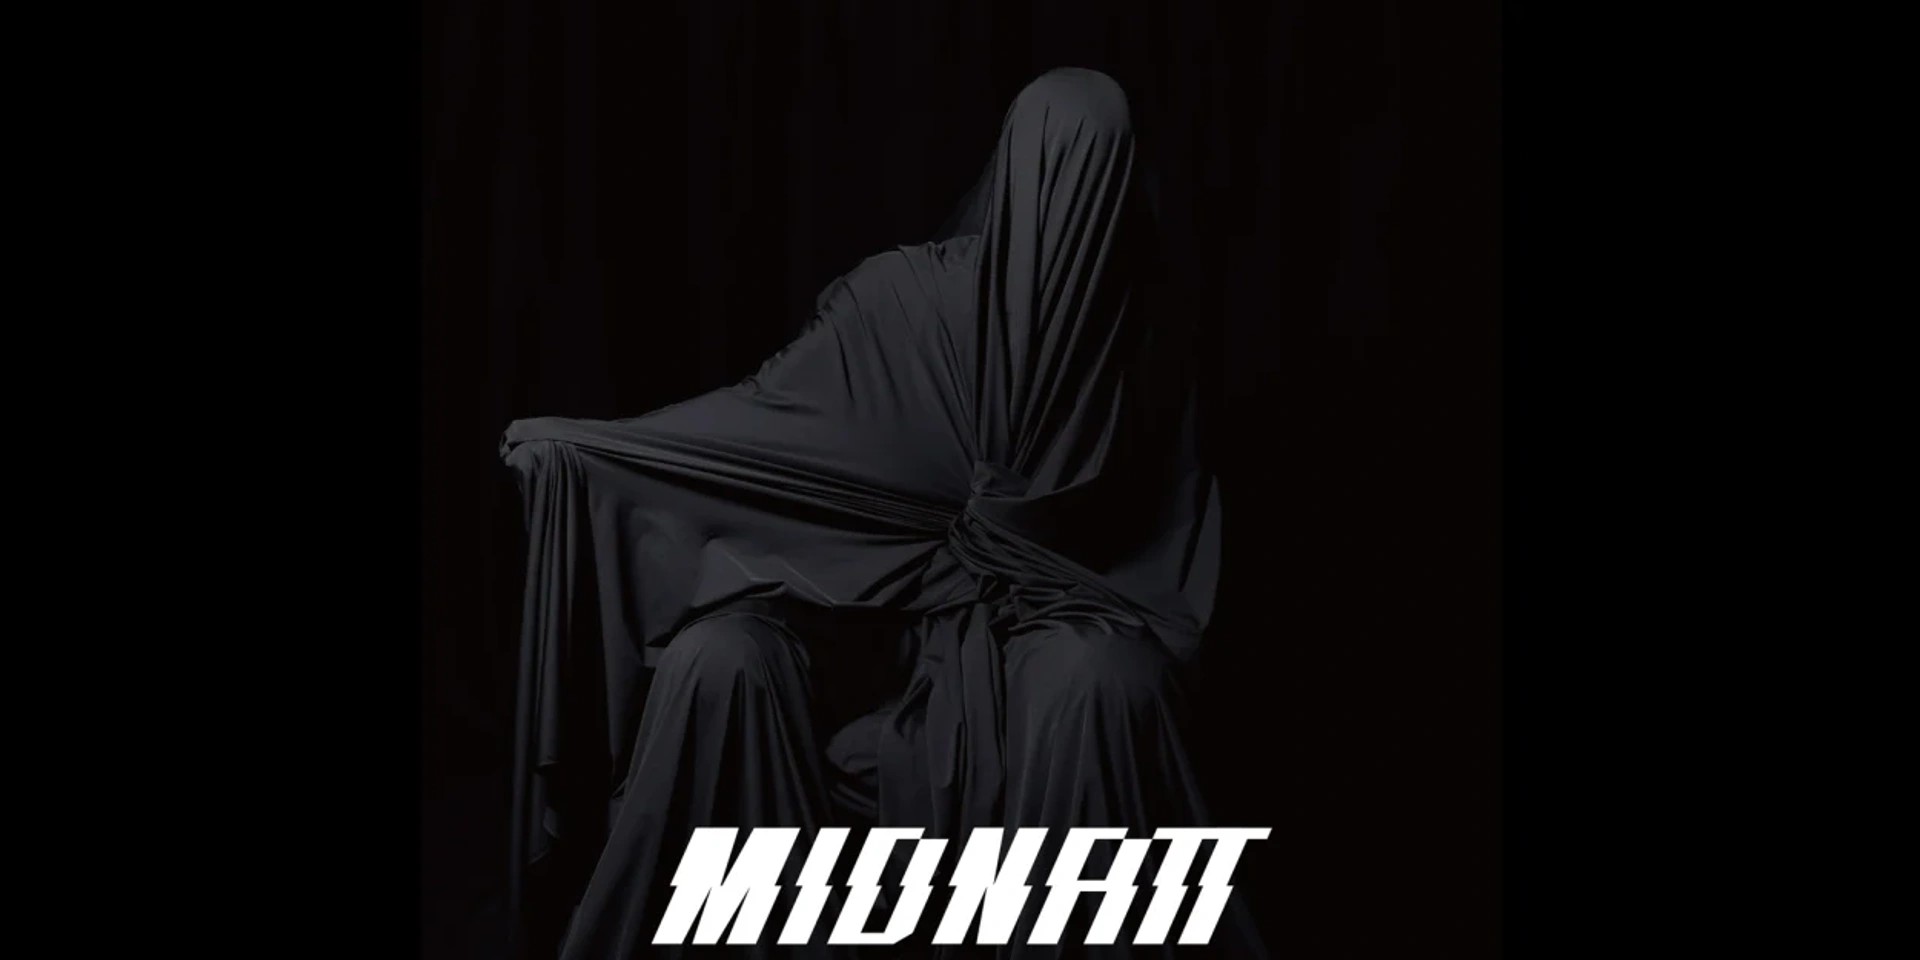 HYBE artist MIDNATT debuts with 'Masquerade' in English, Korean, Japanese, Spanish, Chinese, and Vietnamese – watch